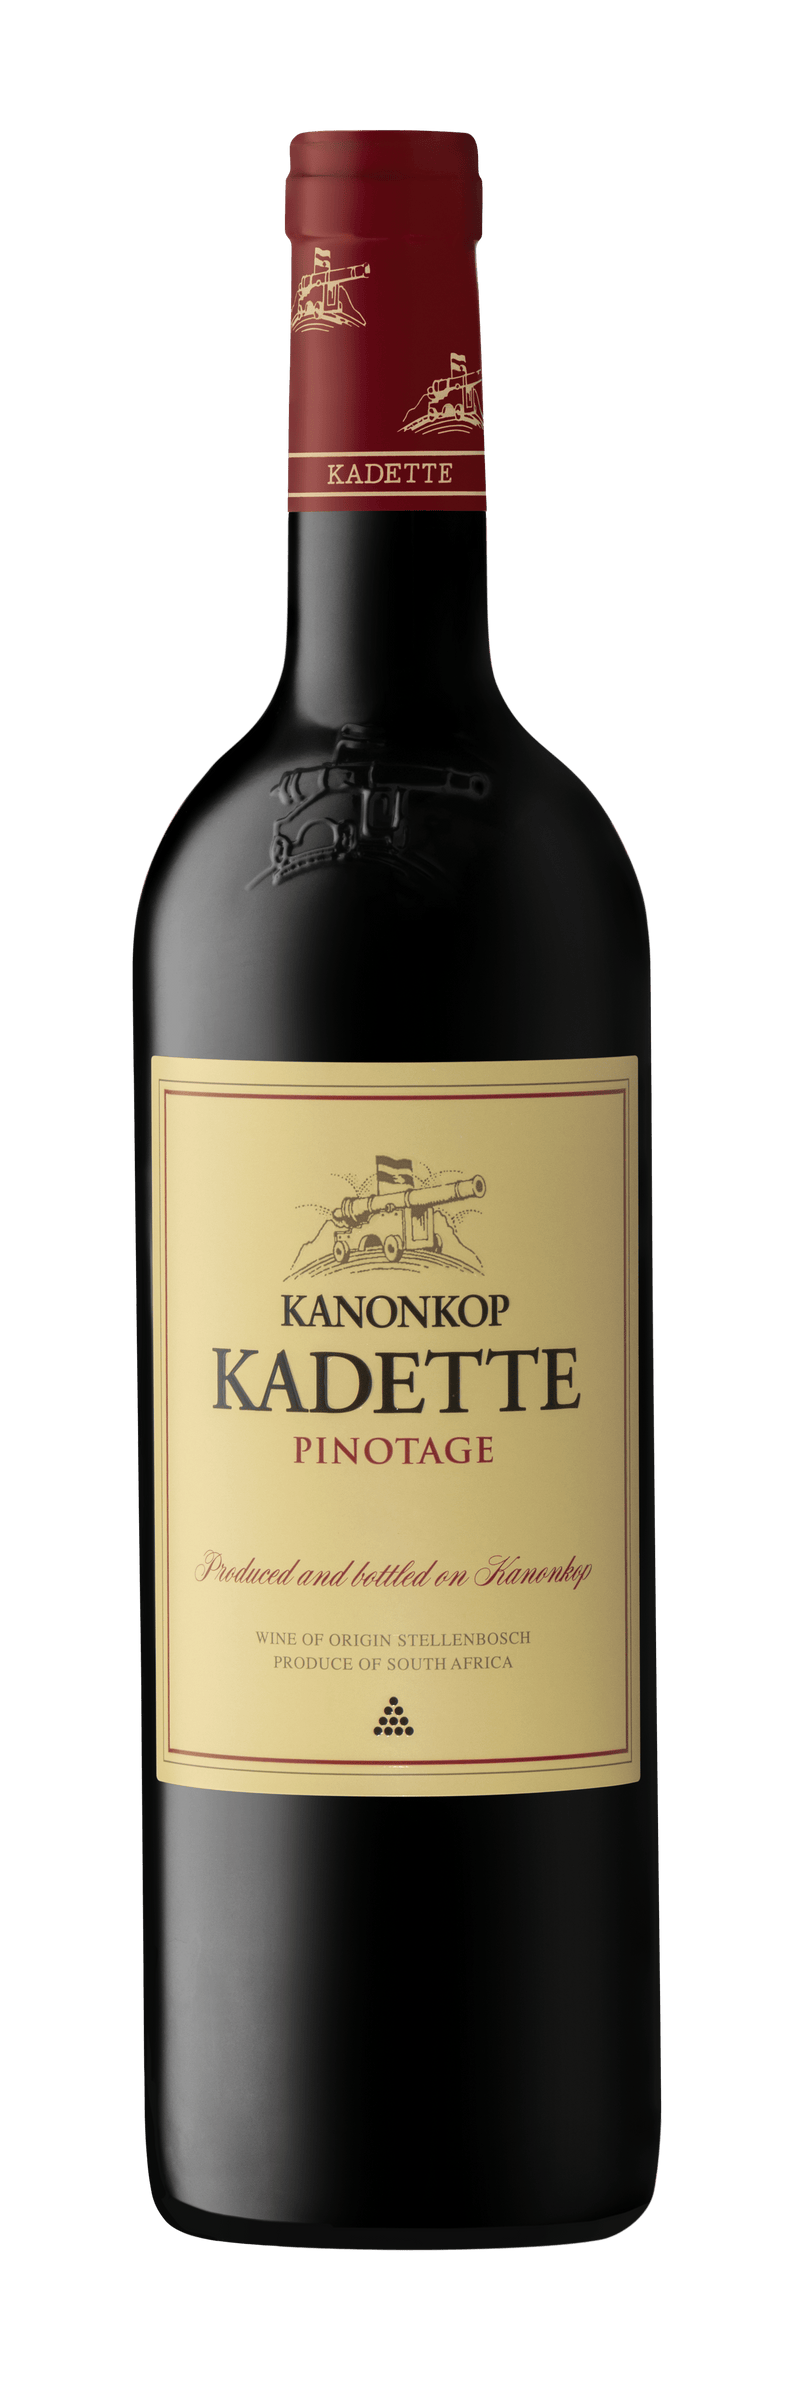 Kanonkop Kadette Pinotage 2018